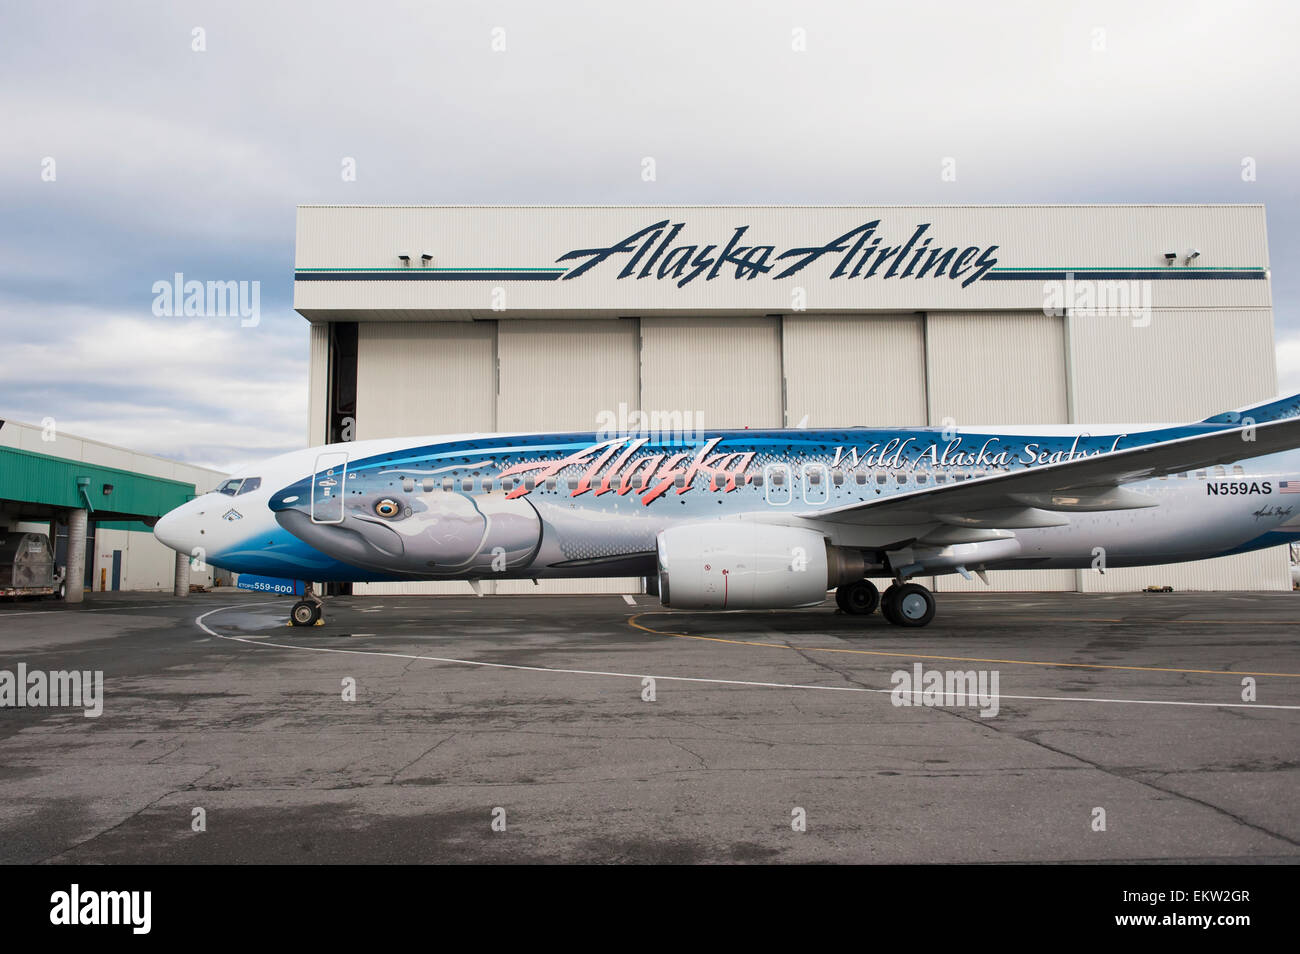 Alaska Airlines 'Salmon 30 Salmon' à l'Aéroport International Ted Stevens Anchorage, Alaska. Banque D'Images